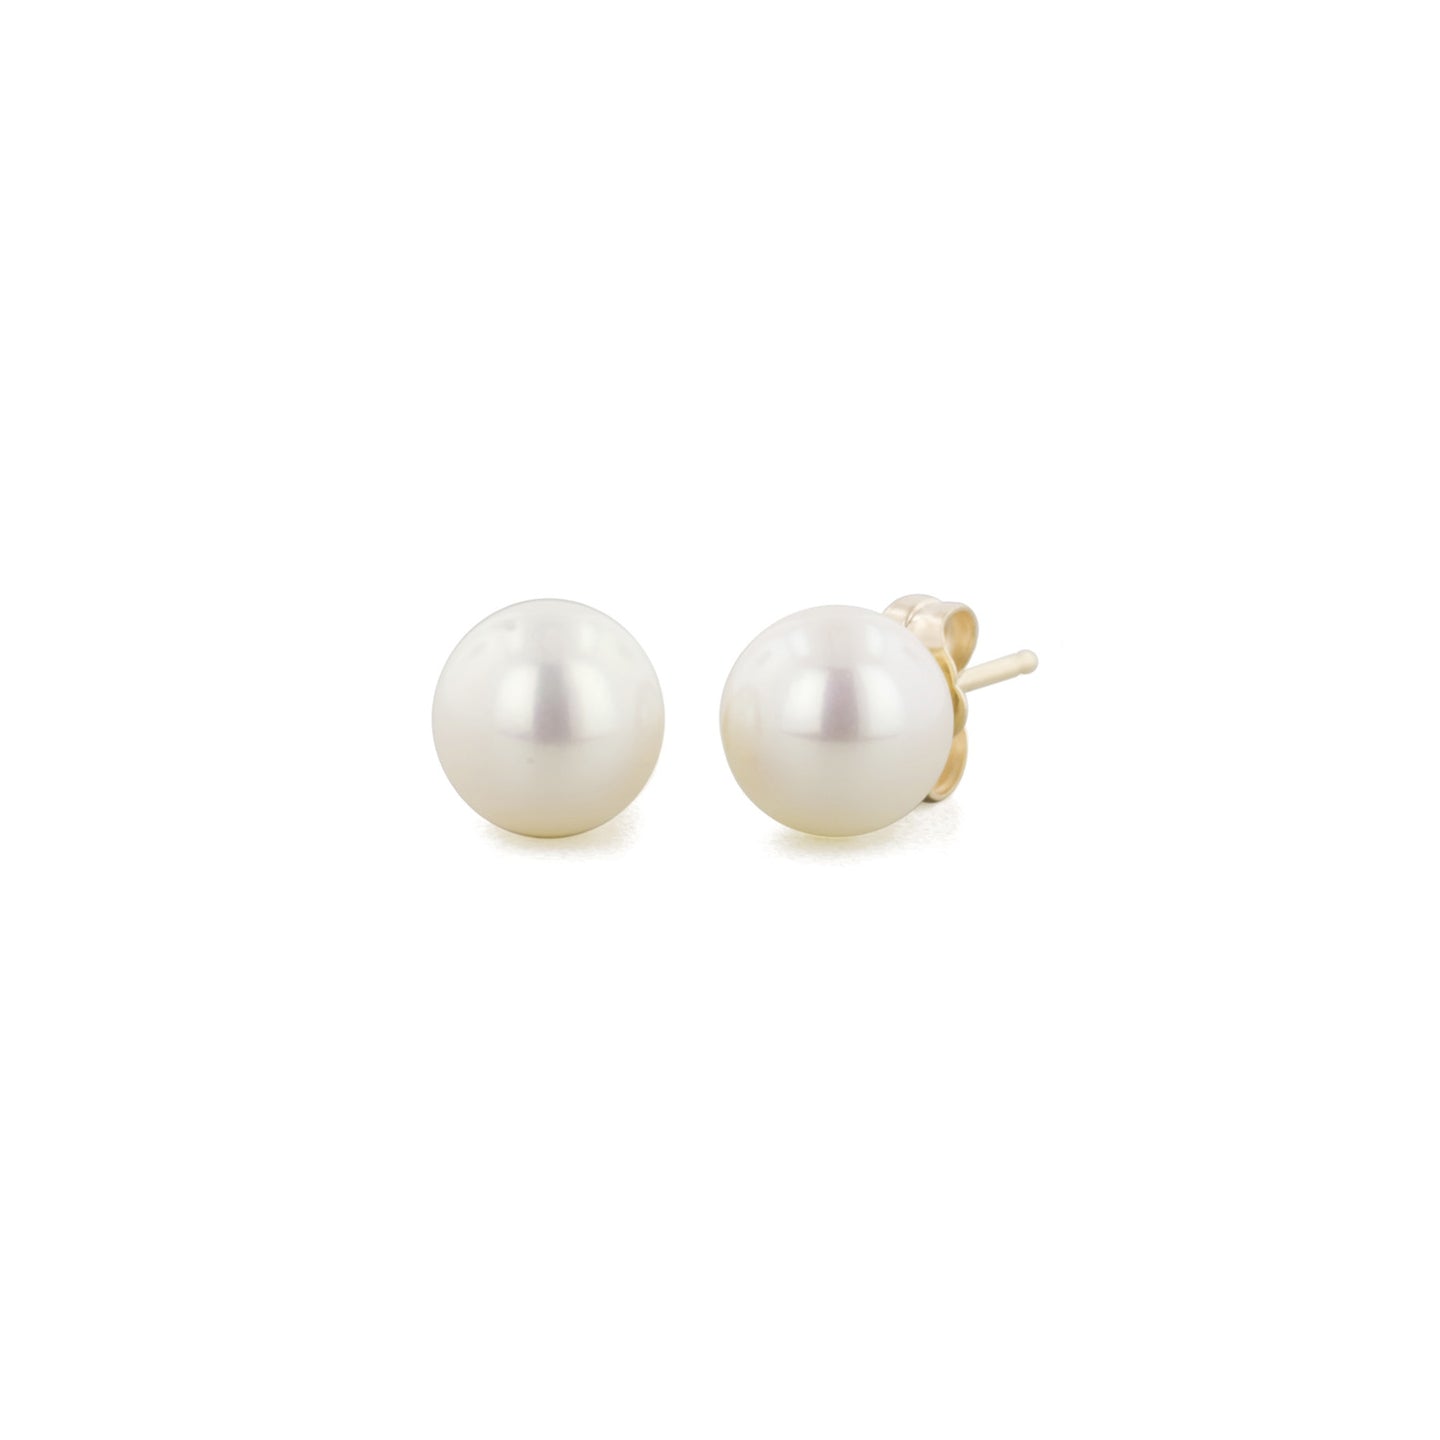 Sabel Pearl Near Round Pearl Earrings in 5mm